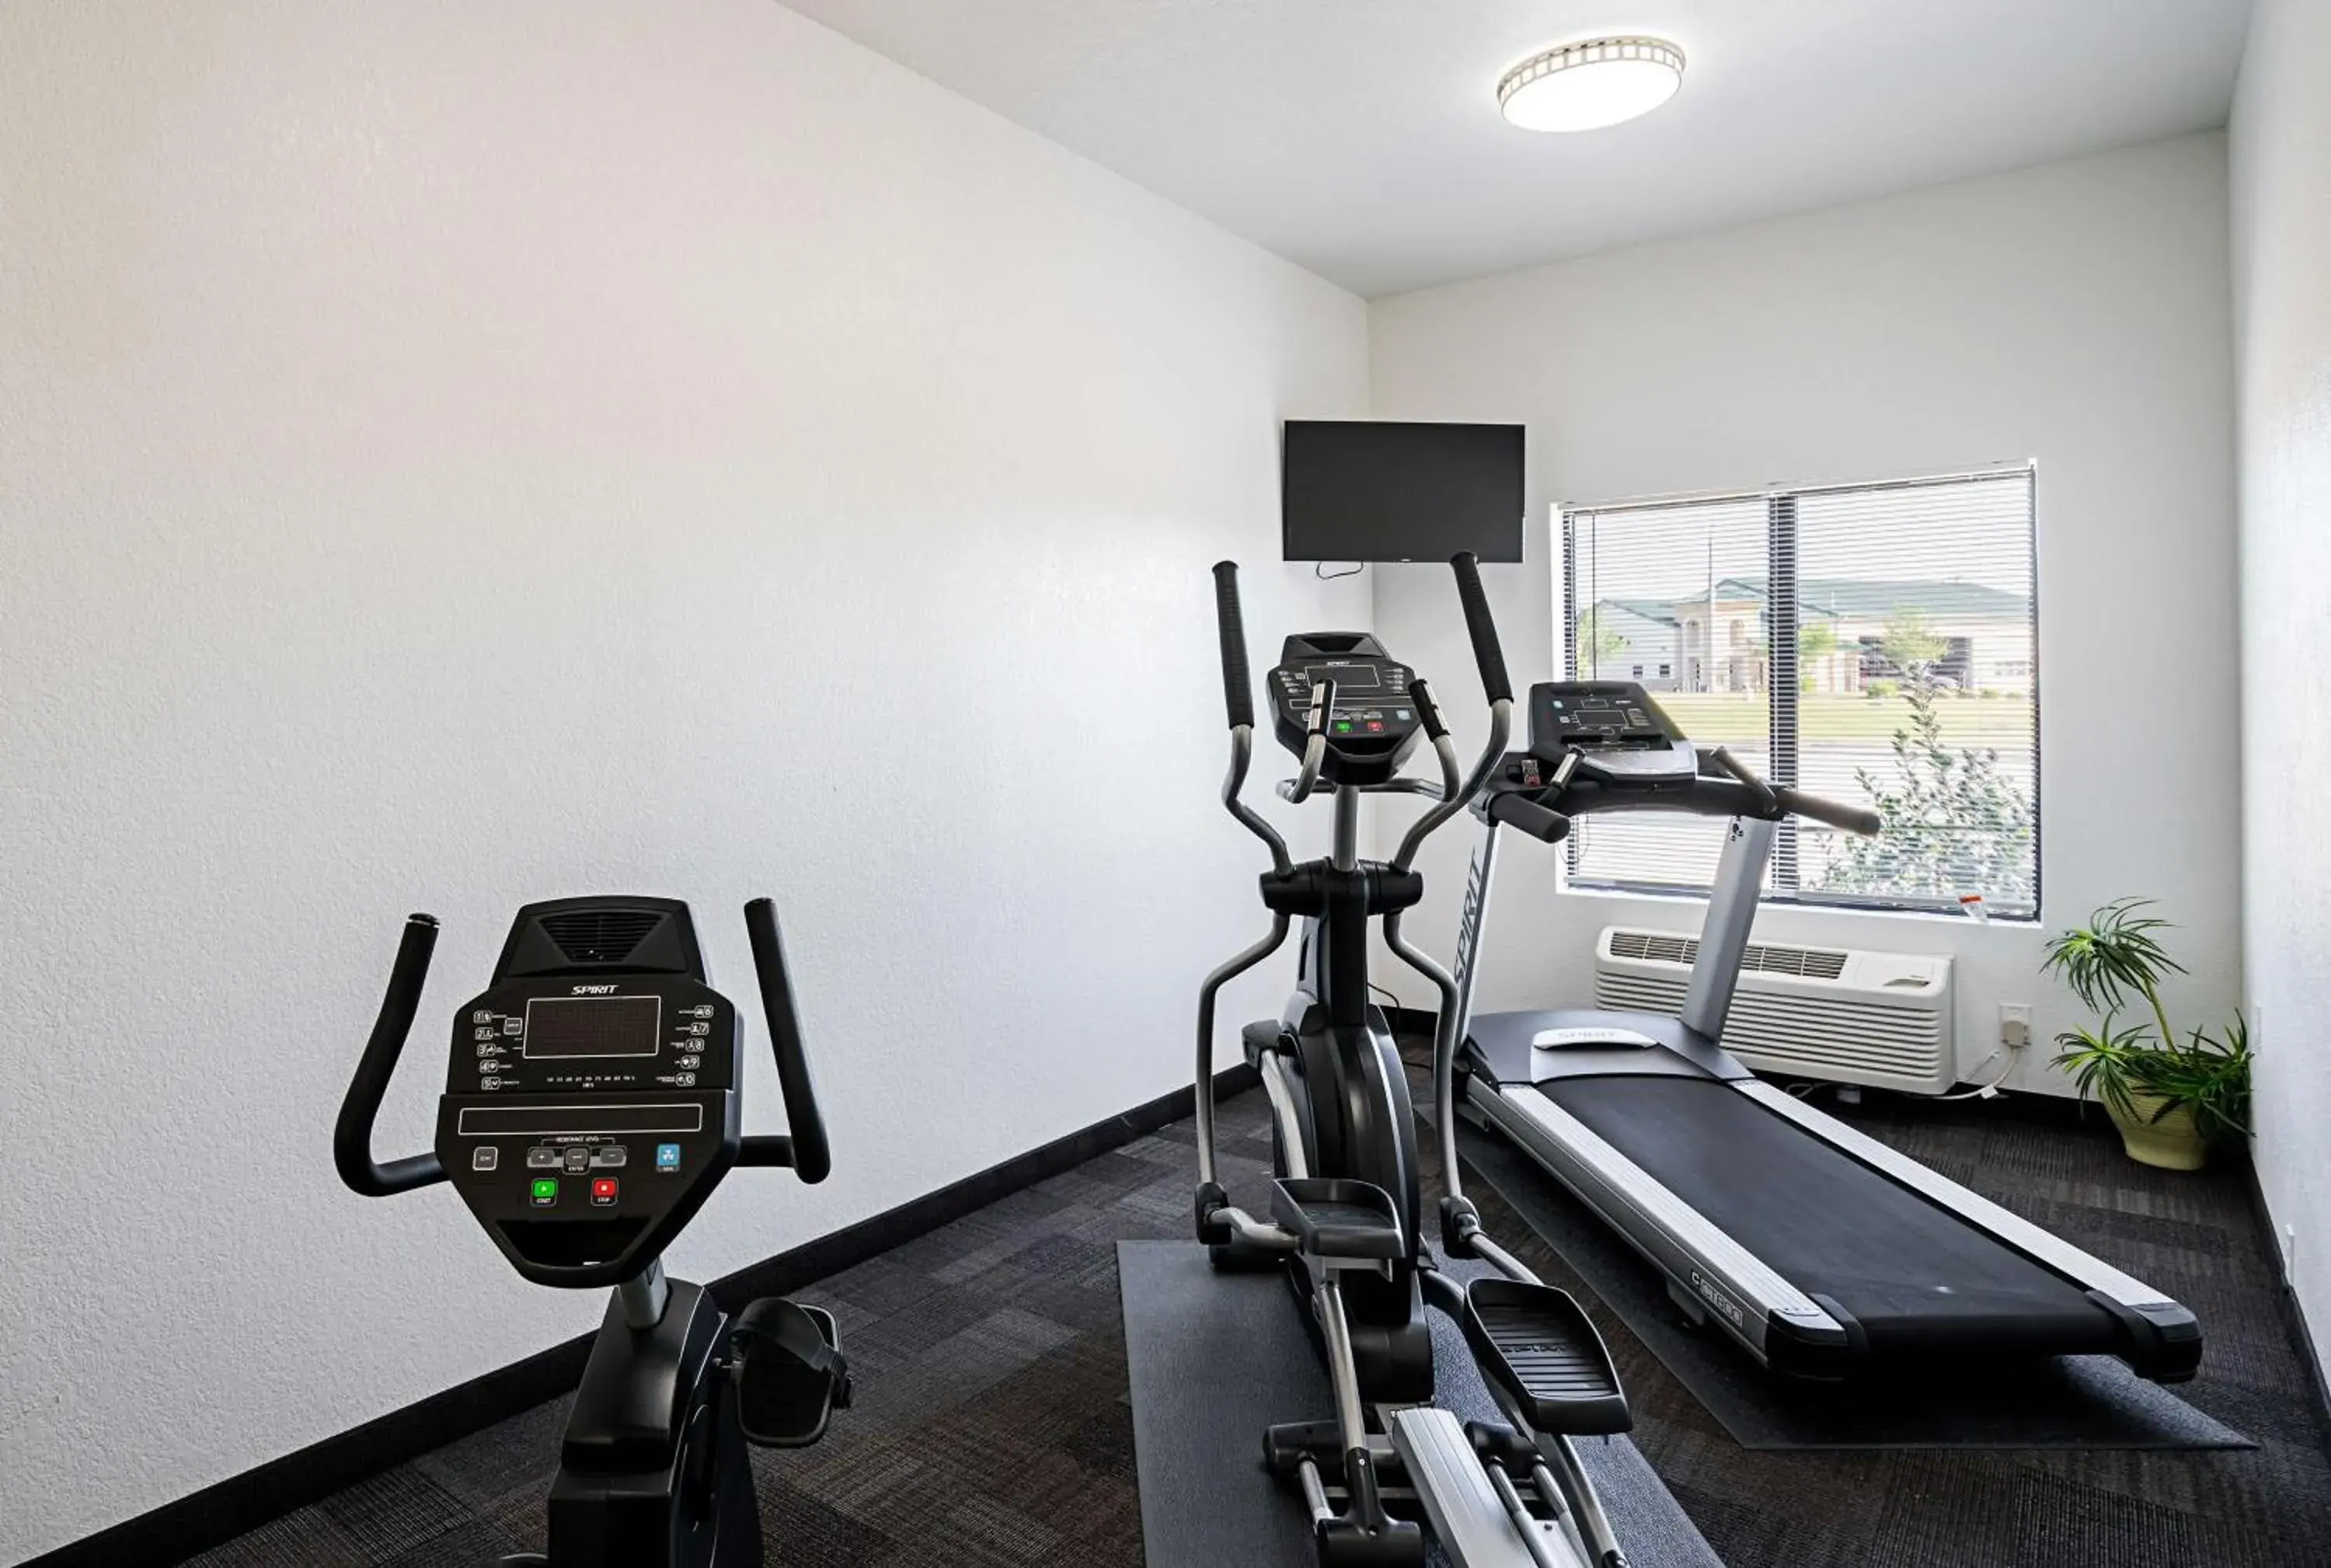 Fitness centre/facilities, Fitness Center/Facilities in Studio 6-Buda, TX